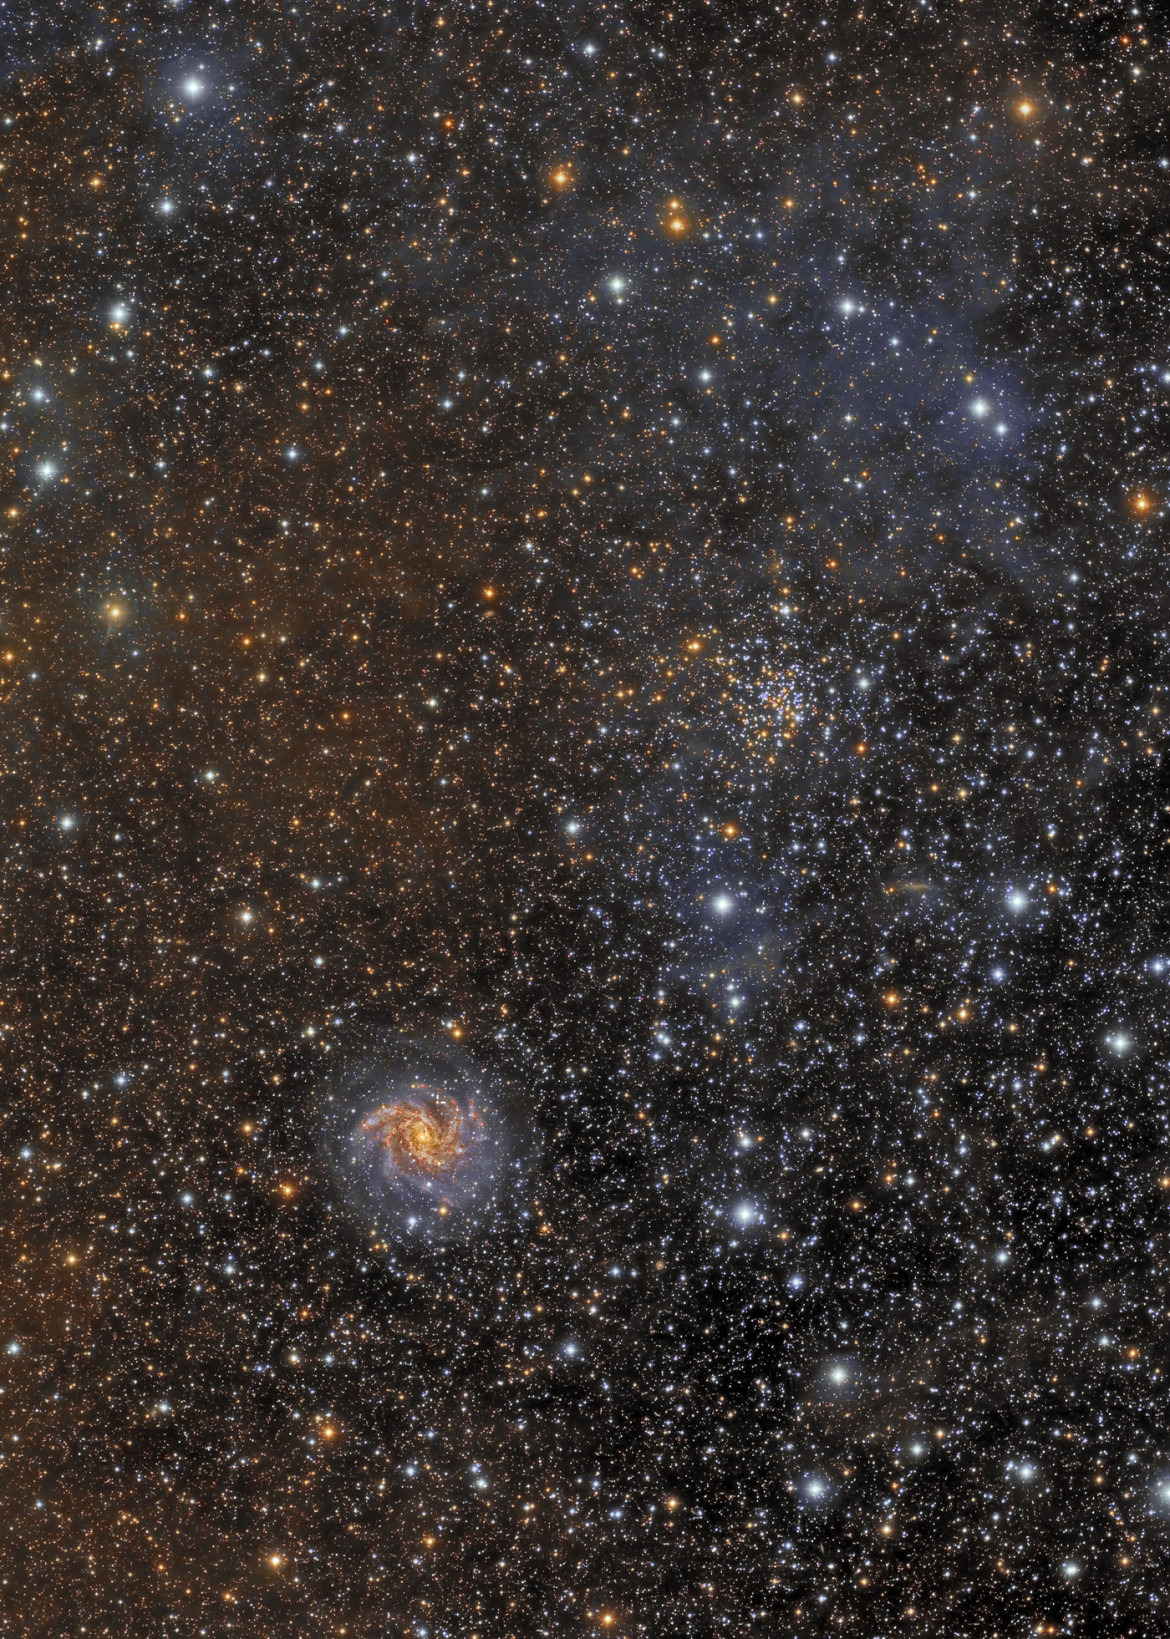 fot. César Blanco, "Fireworks Galaxy NGC 6939 - SN 2017 EAW", 3. miejsce w kategorii Galaxies / Insight Astronomy Photographer of the Year 2018